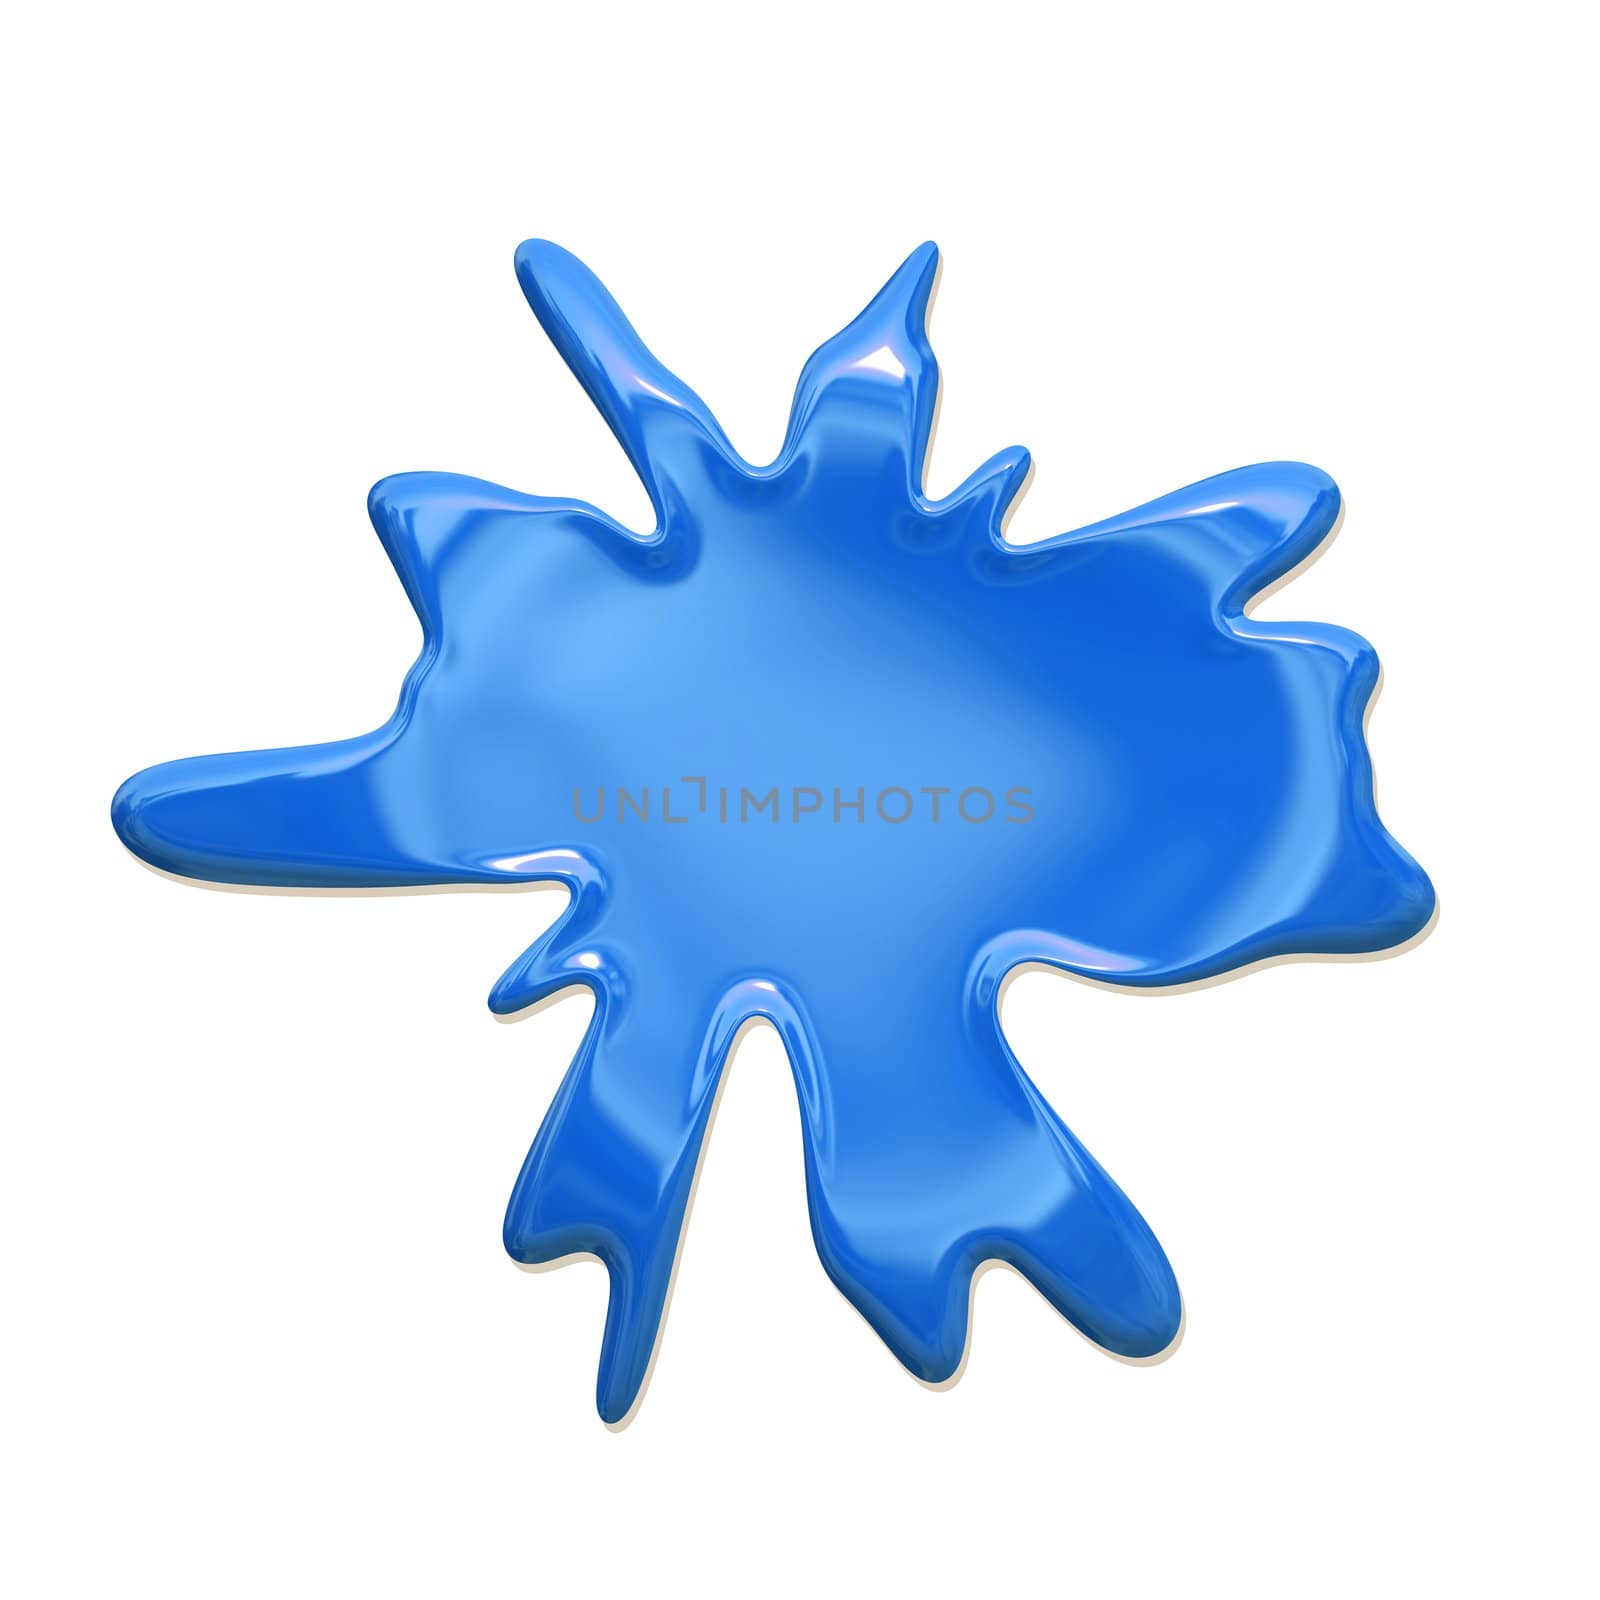 Blue Paint Splatter Isolated on White Background